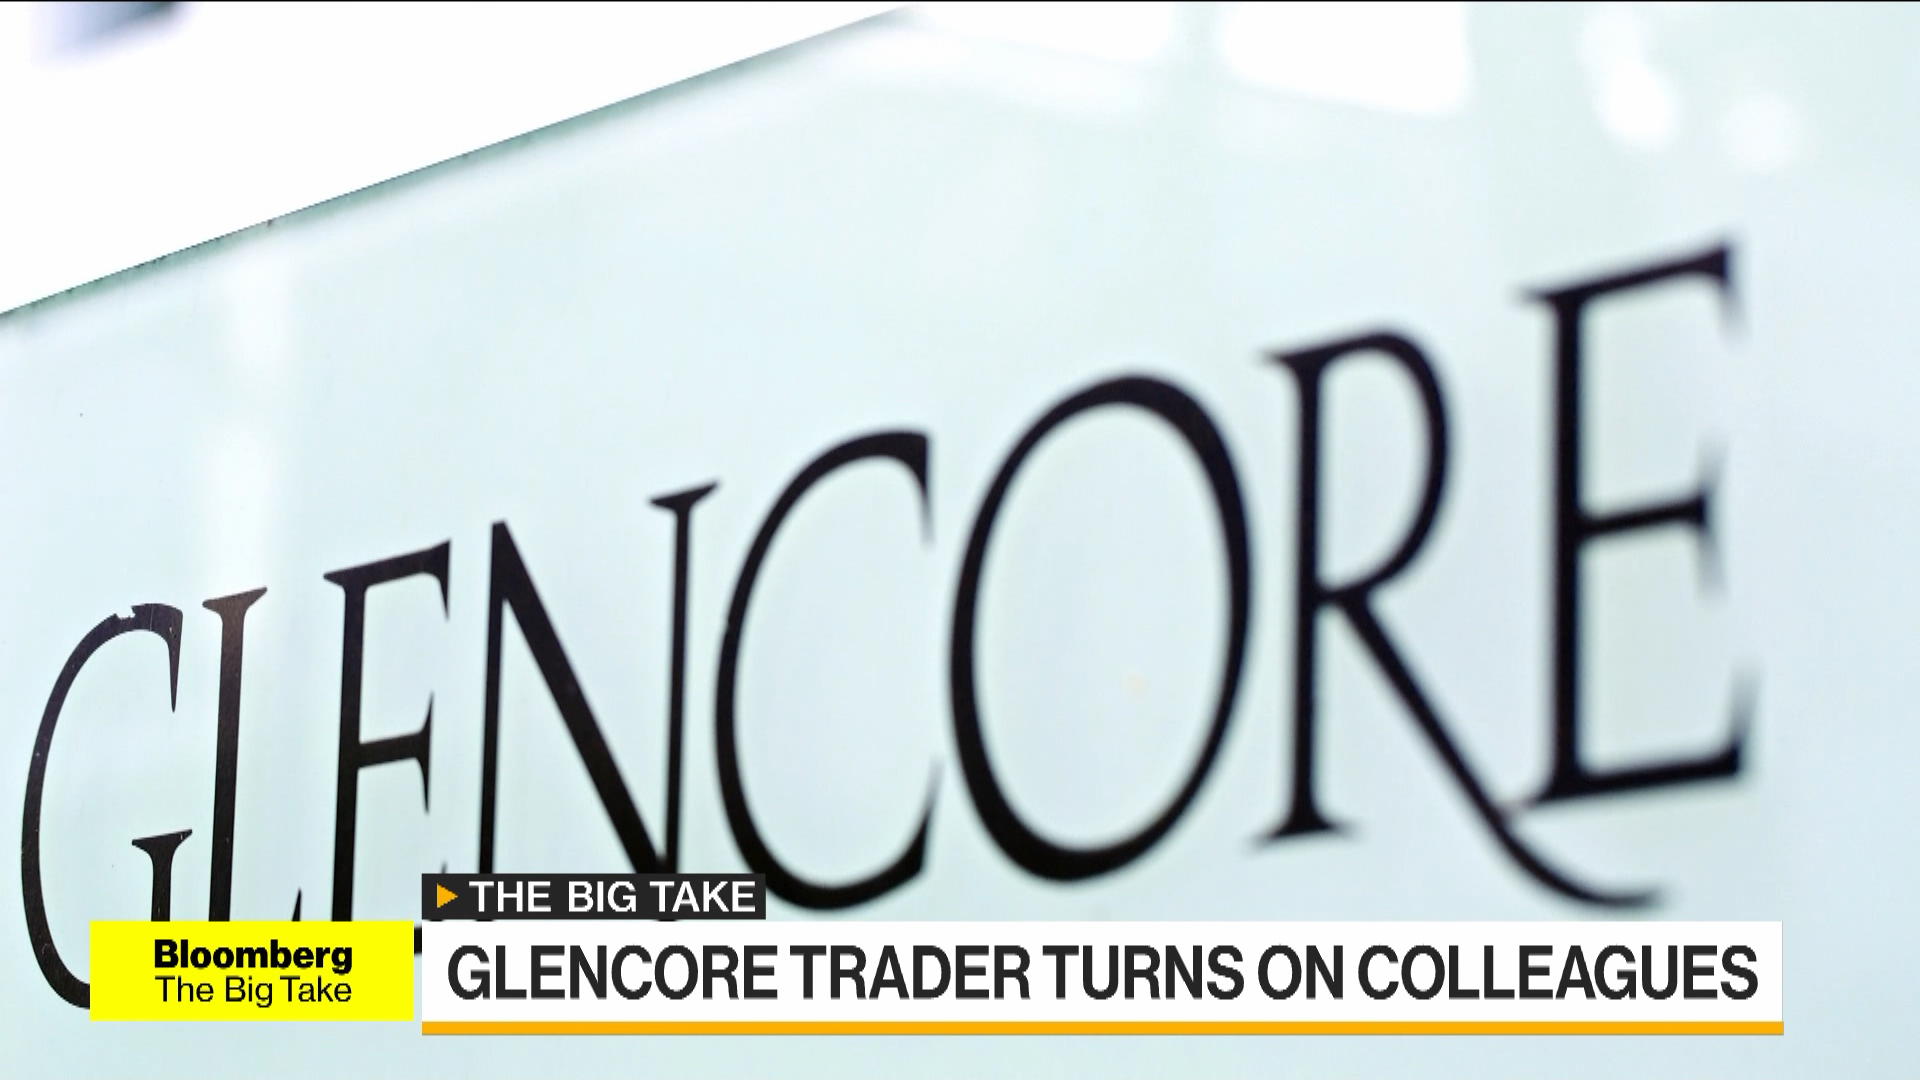 Glencore plc equity capital gsforex indira